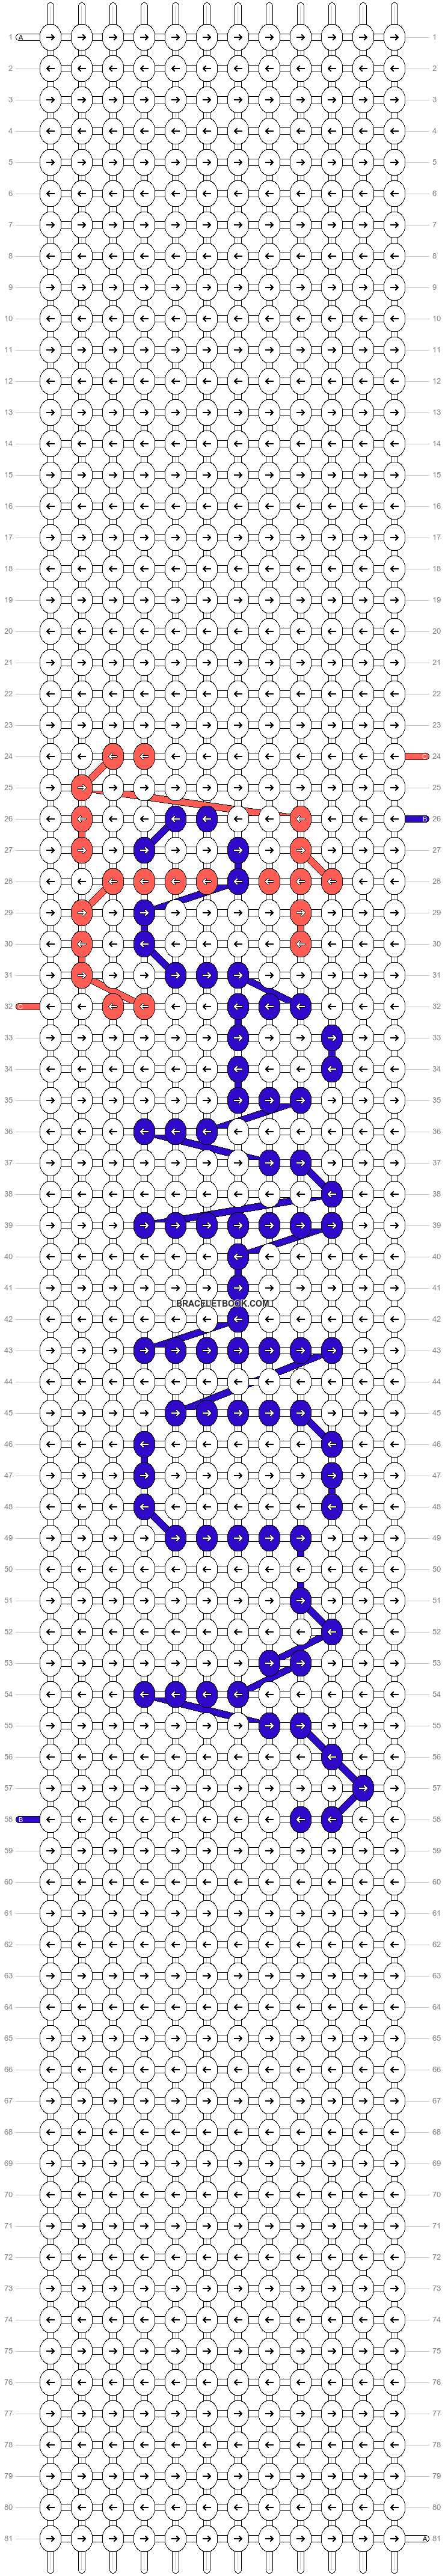 Alpha pattern #38175 variation #56014 pattern